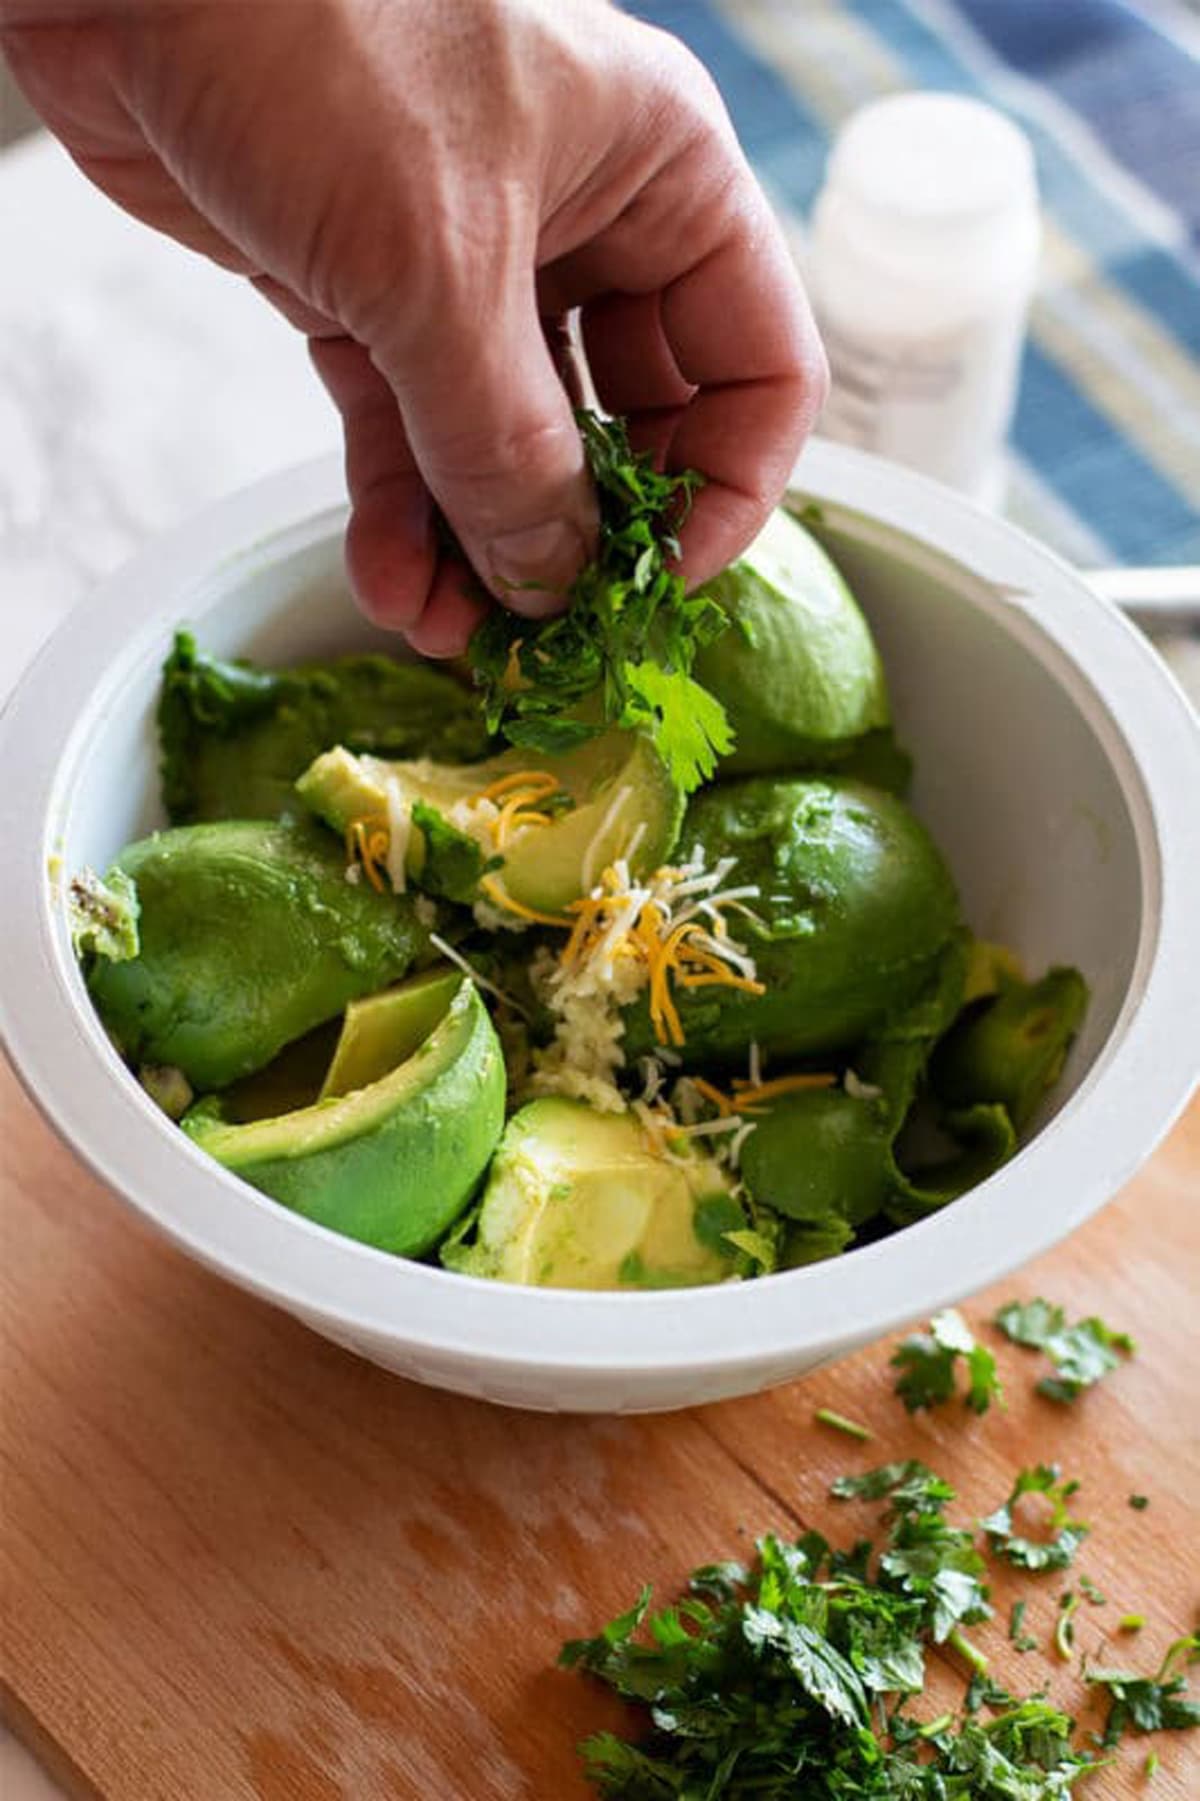 Sprinkling fresh cilantro leaves into the guacamole. 